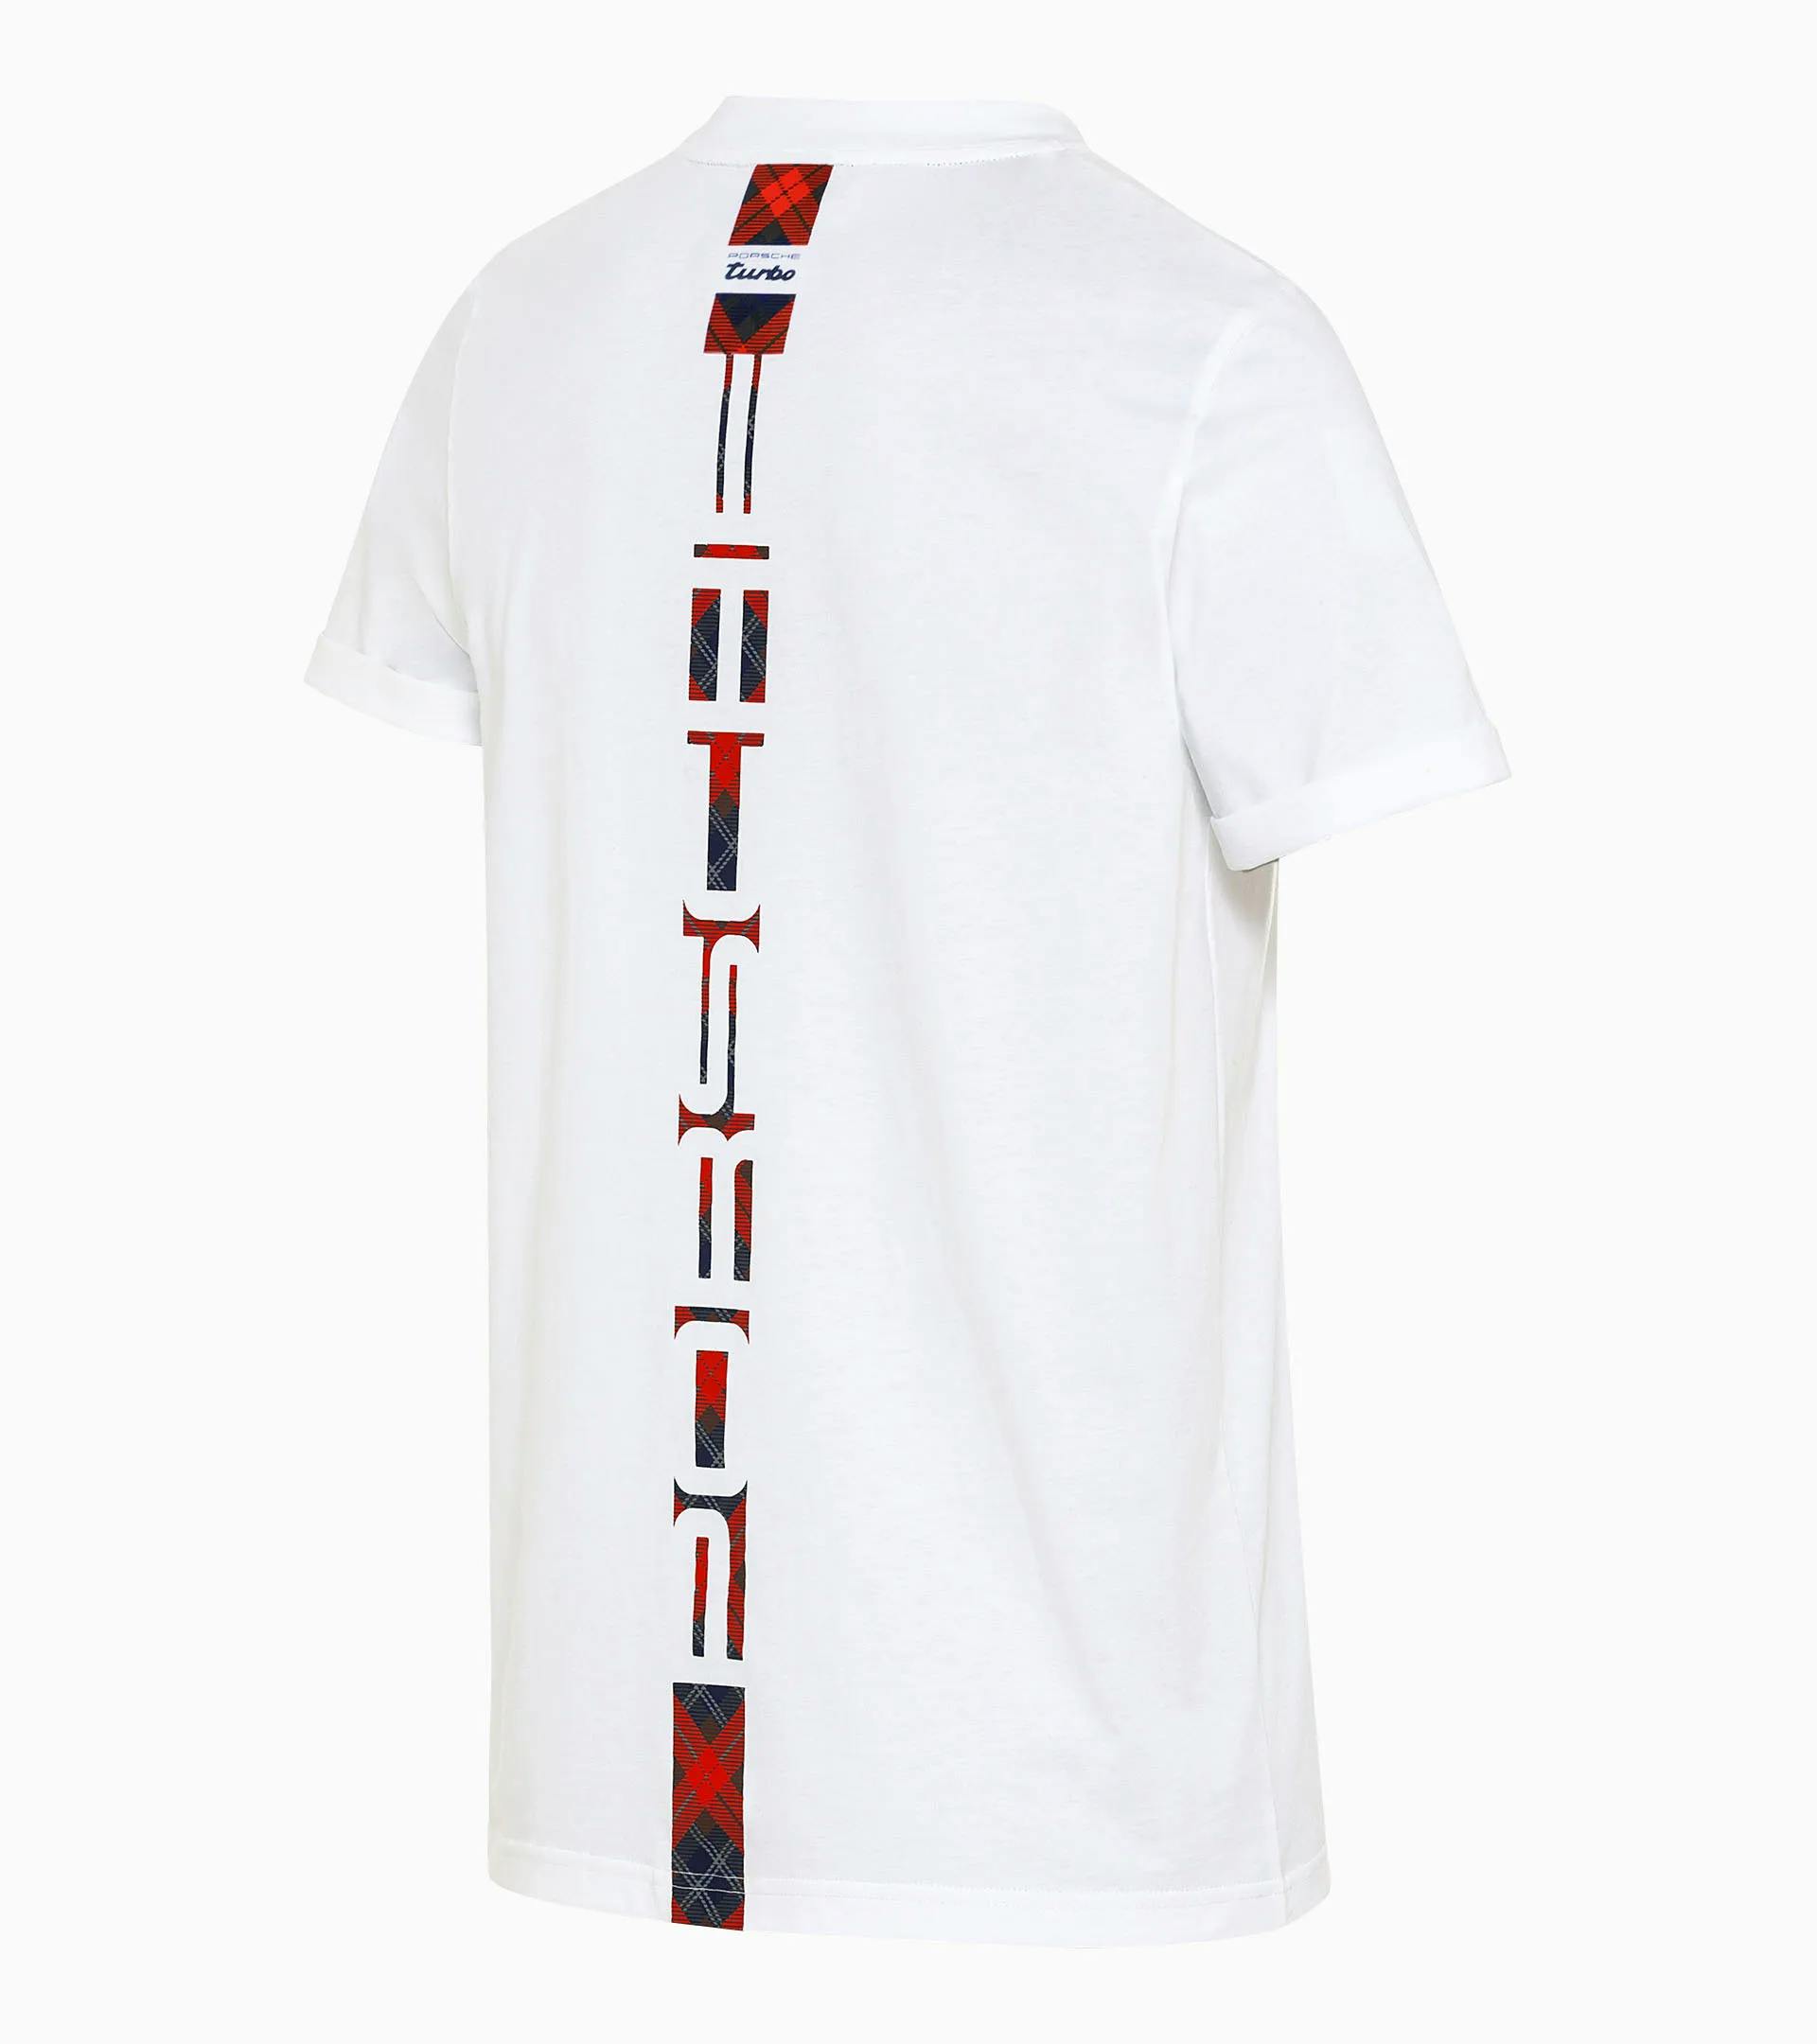 Camiseta unisex – Turbo No. 1 1